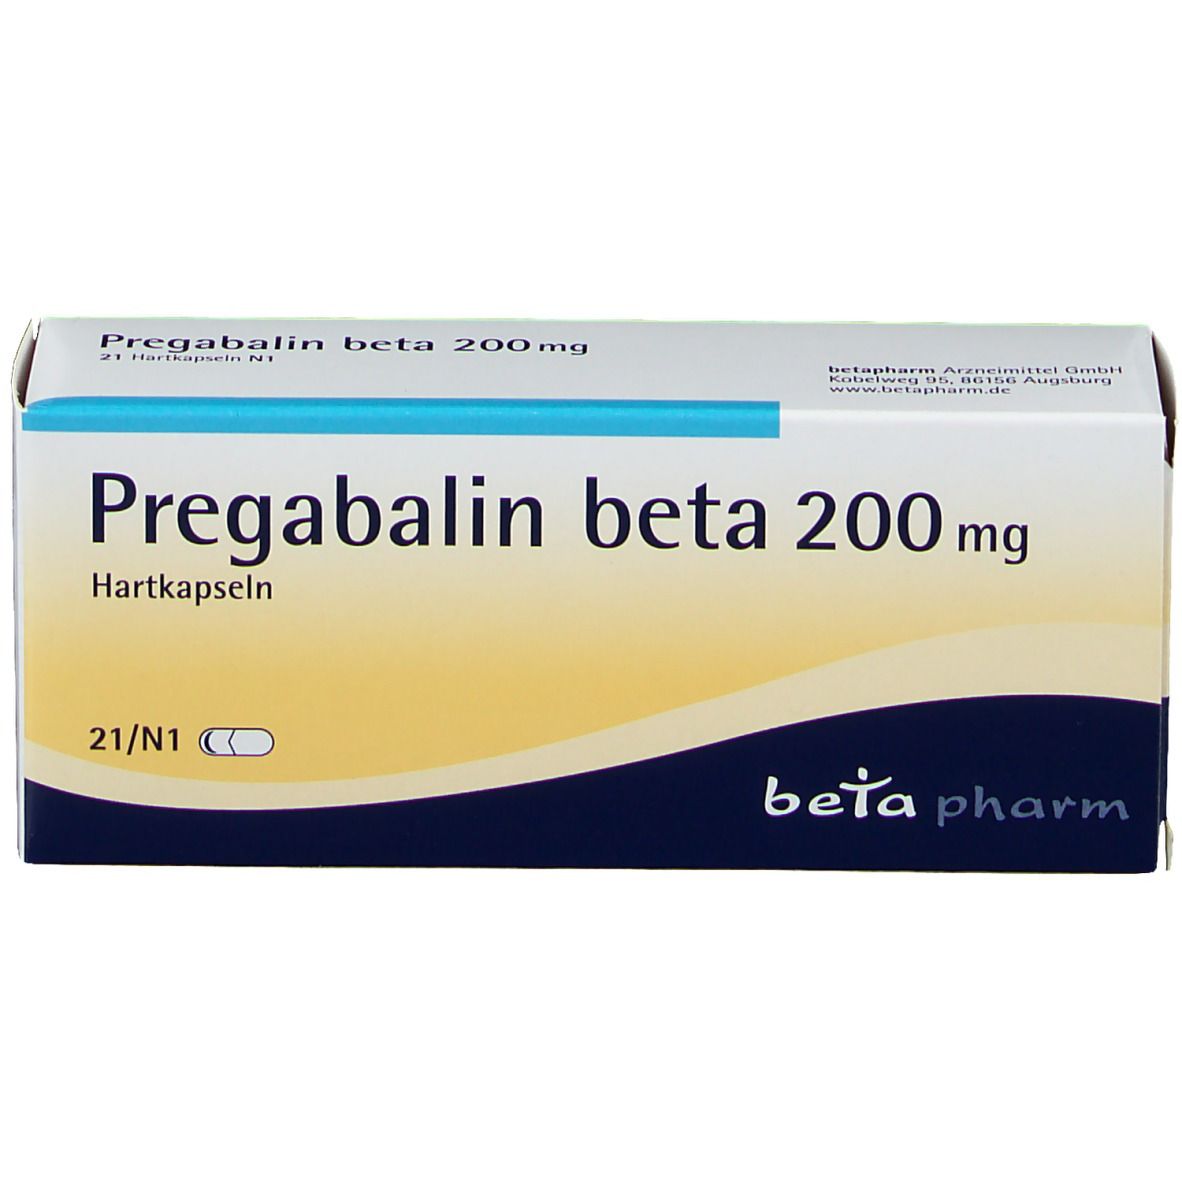 Pregabalin beta 200 mg